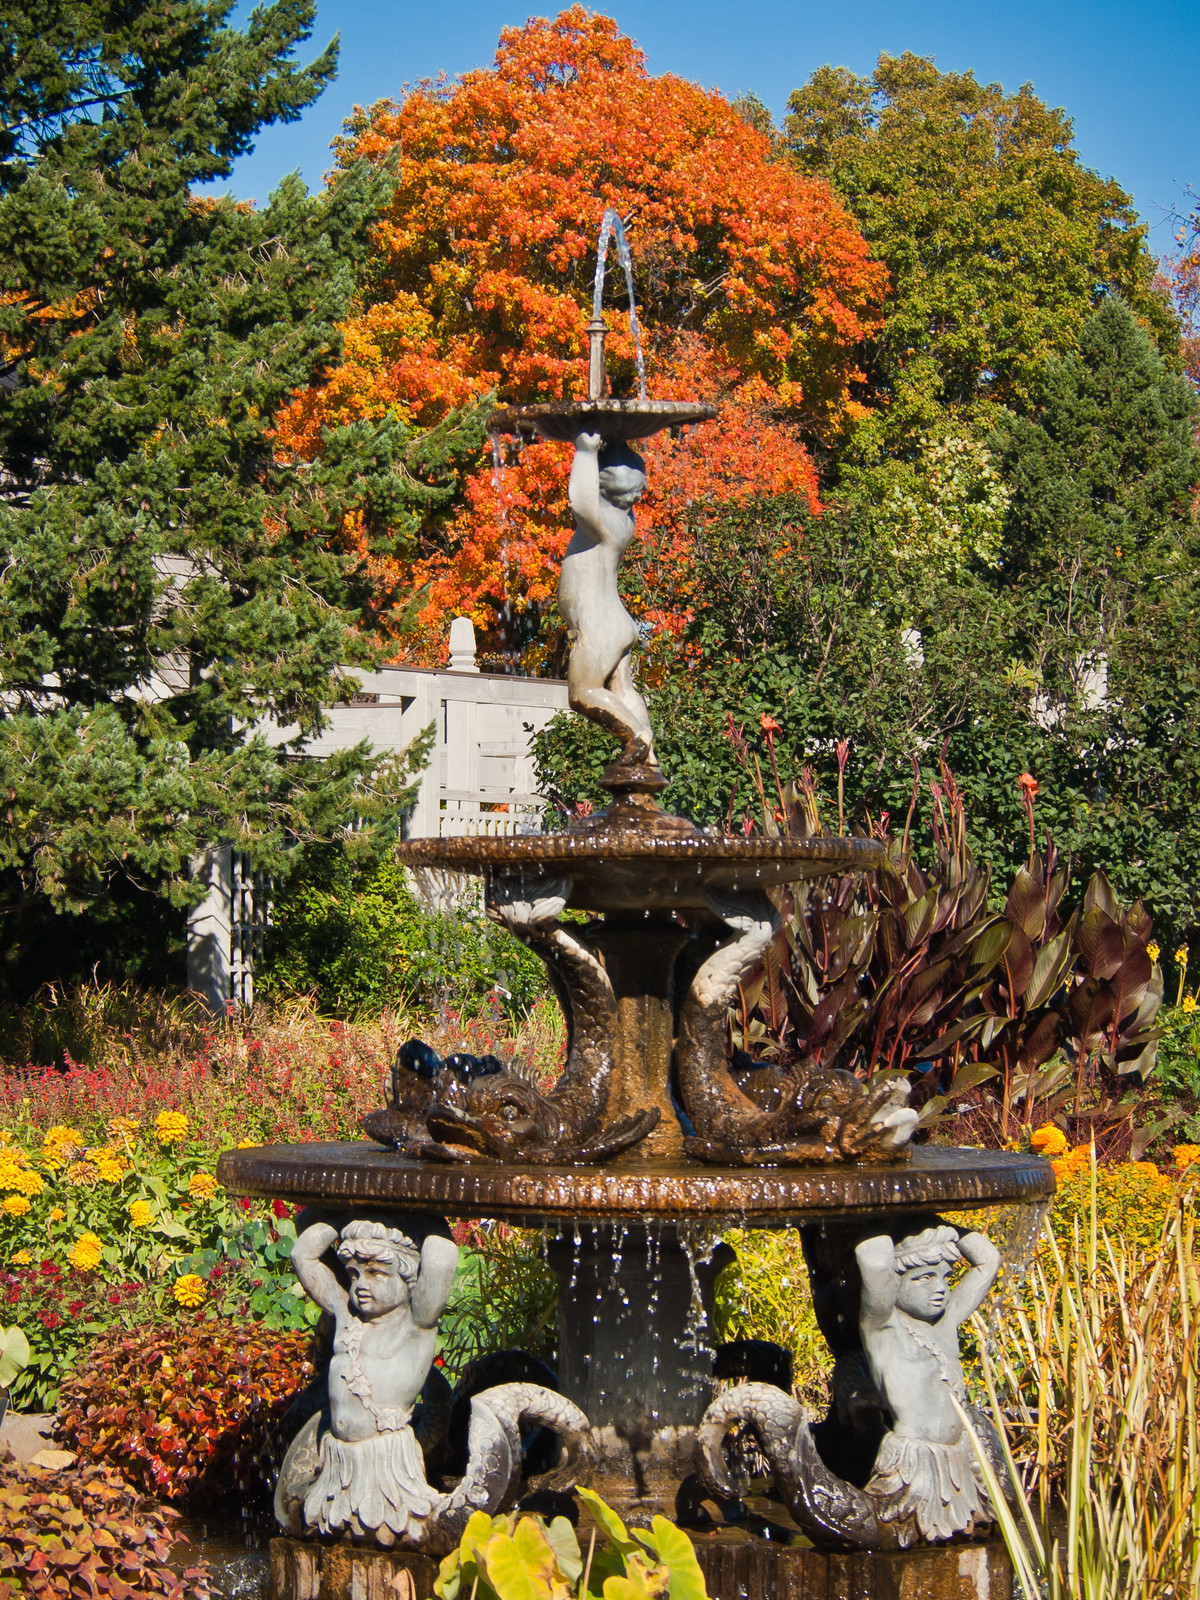 Merboy fountain in the fall